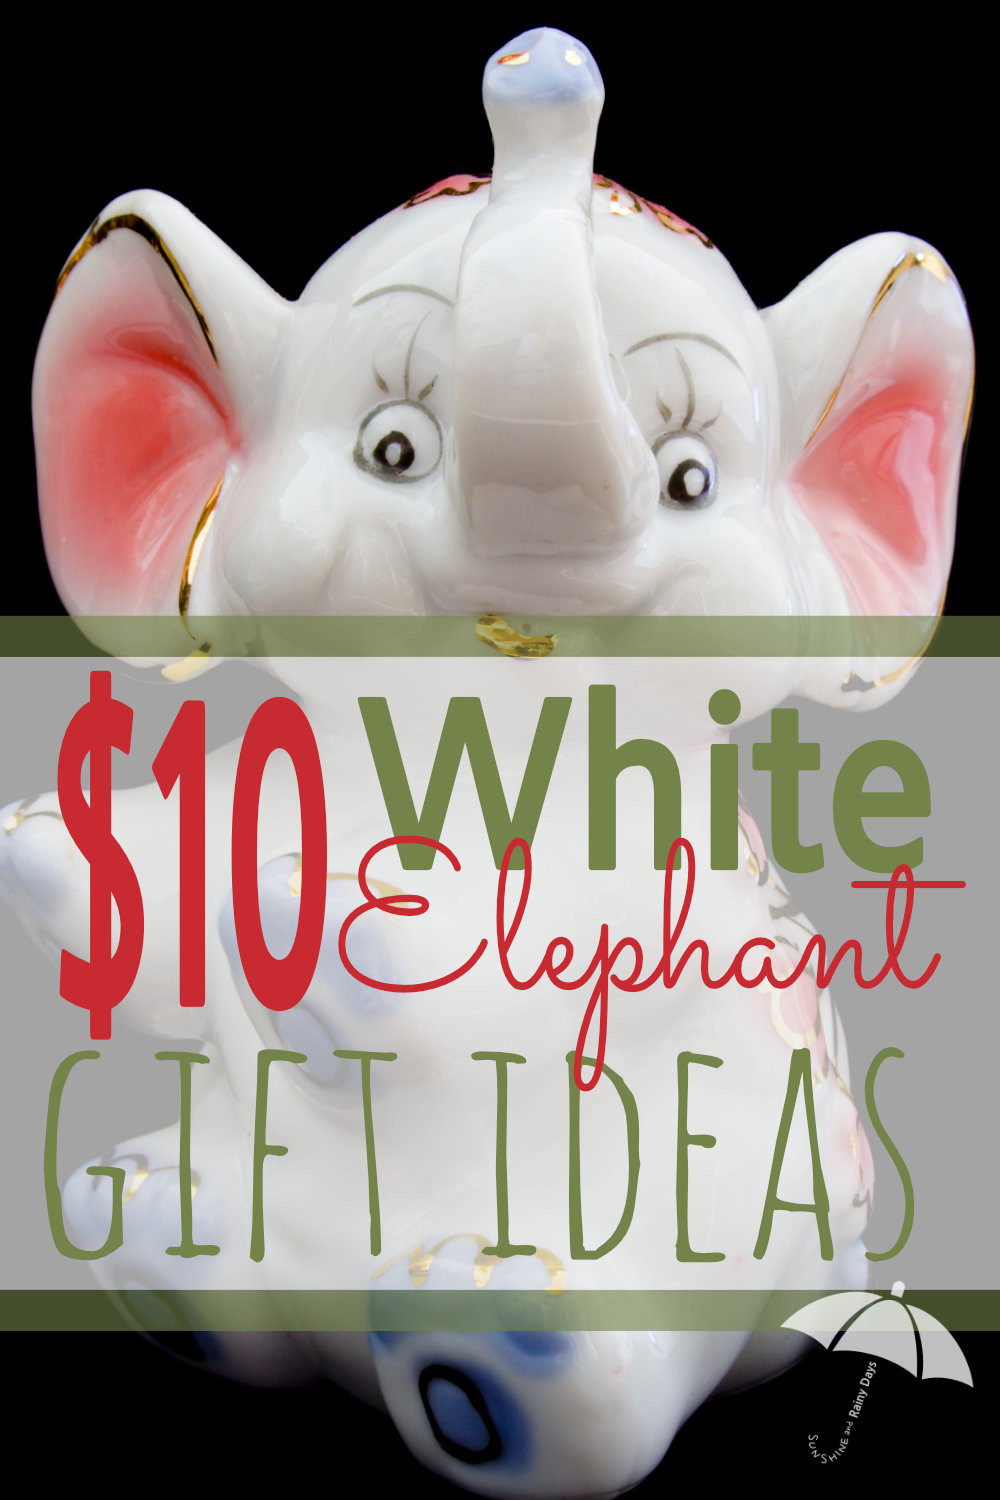 Christmas Gift Exchange Gift Ideas
 $10 White Elephant Gift Exchange Ideas Sunshine and